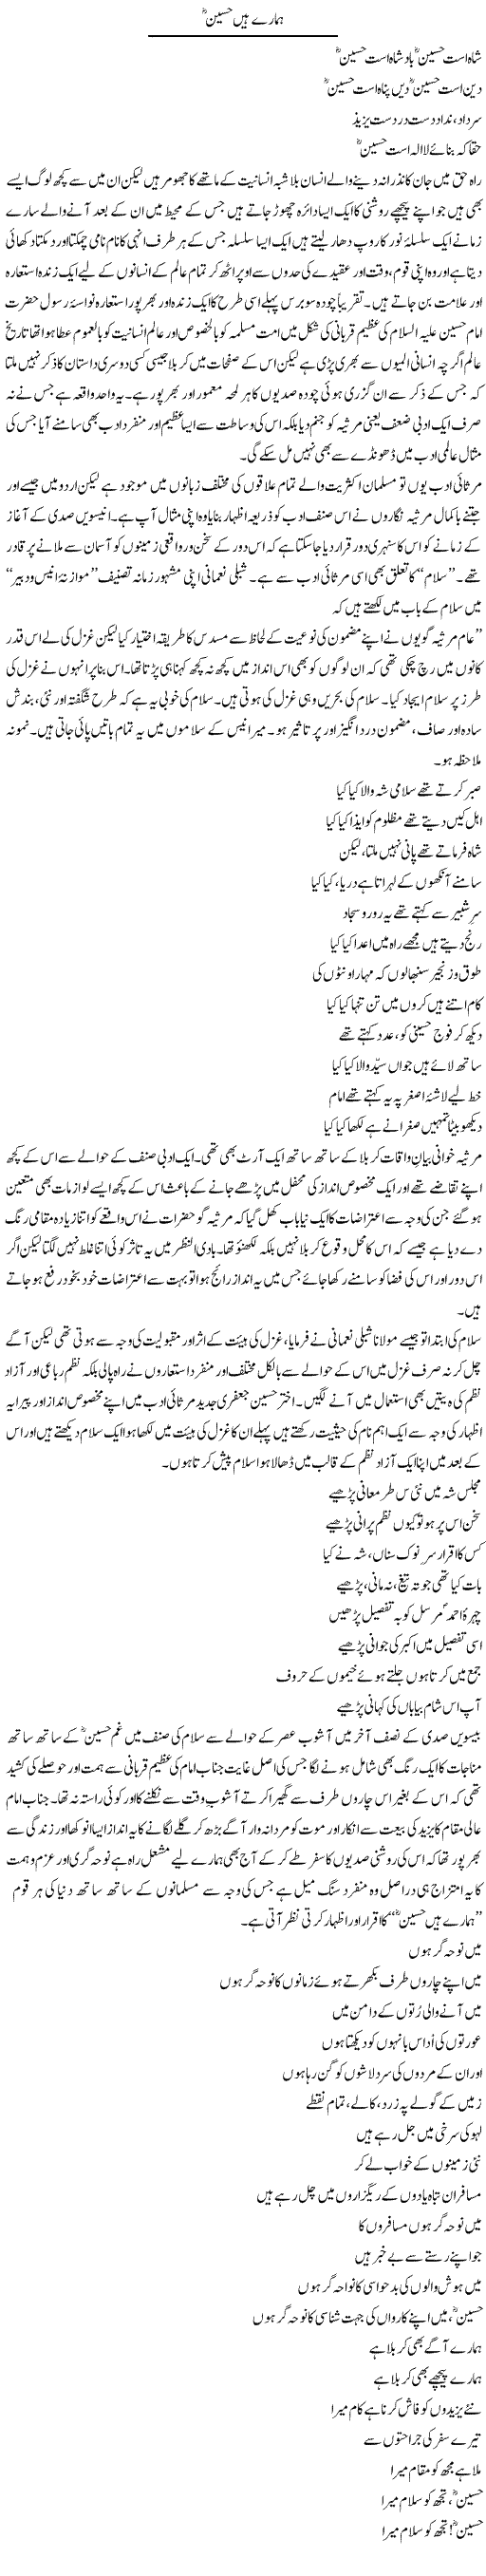 Hamaray Hain Hussain | Amjad Islam Amjad | Daily Urdu Columns